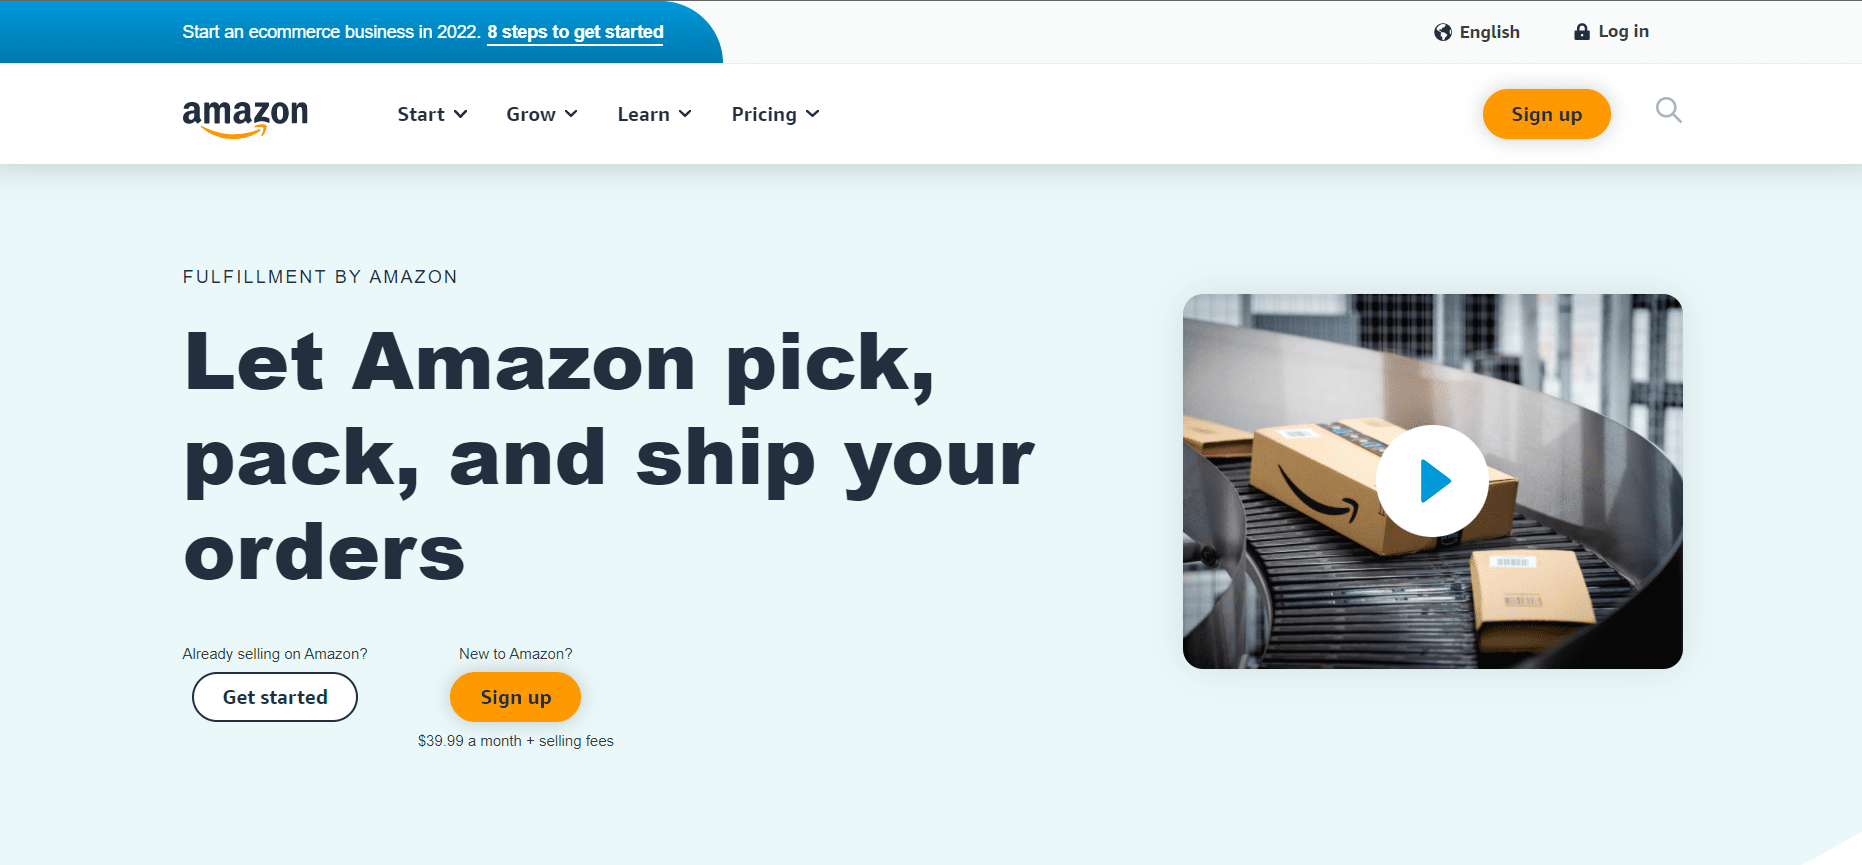 Fulfillment by Amazon (FBA)